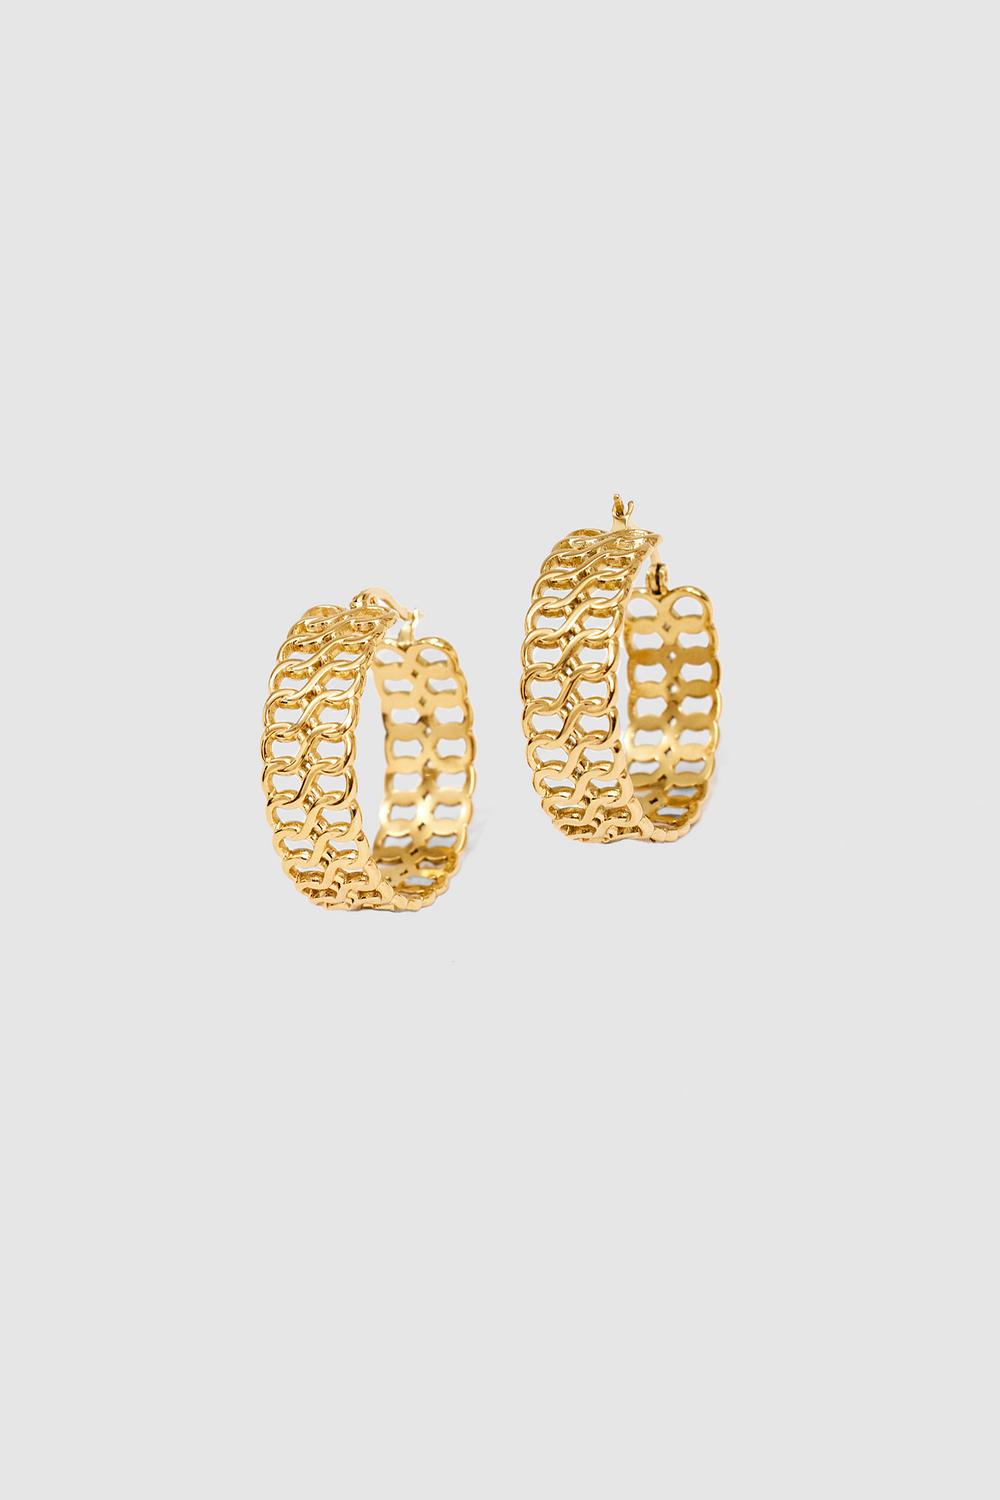 Golden earrings with links